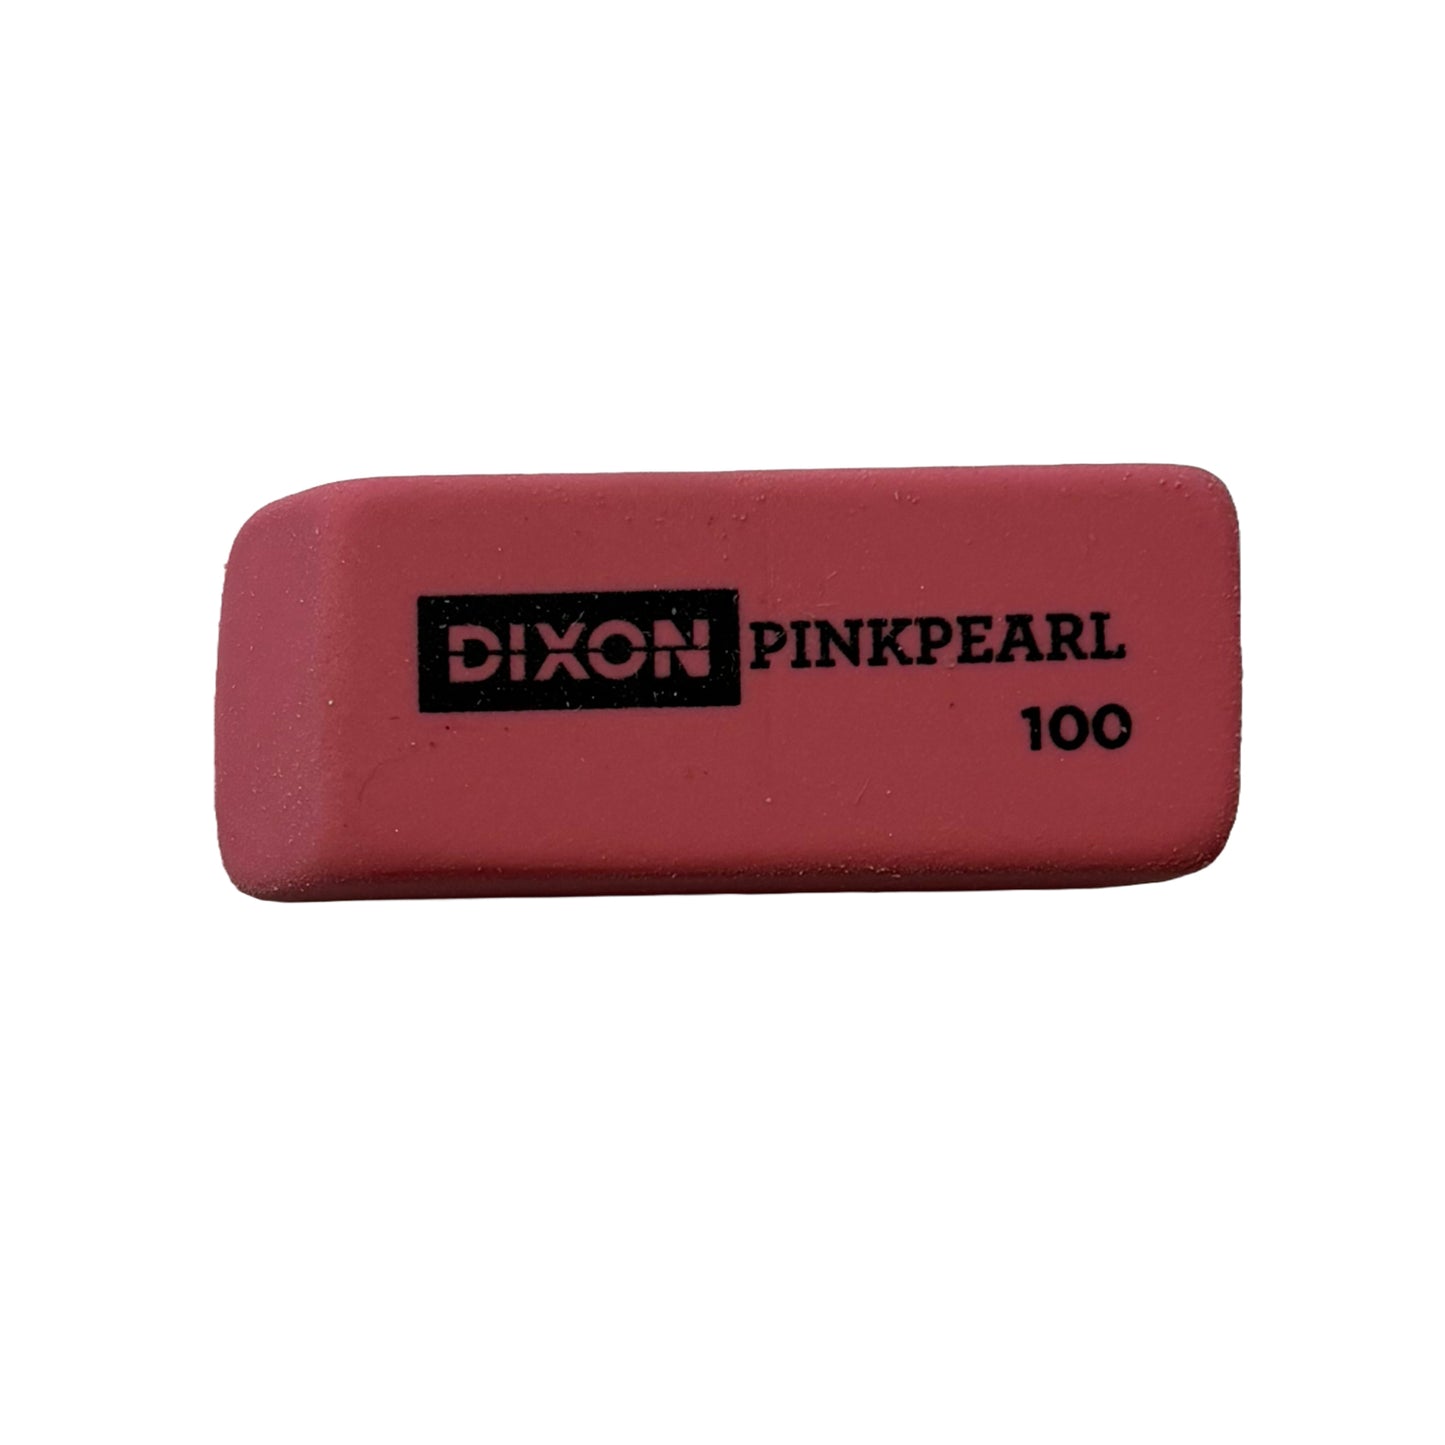 Dixon Pink Pearl & White Erasers